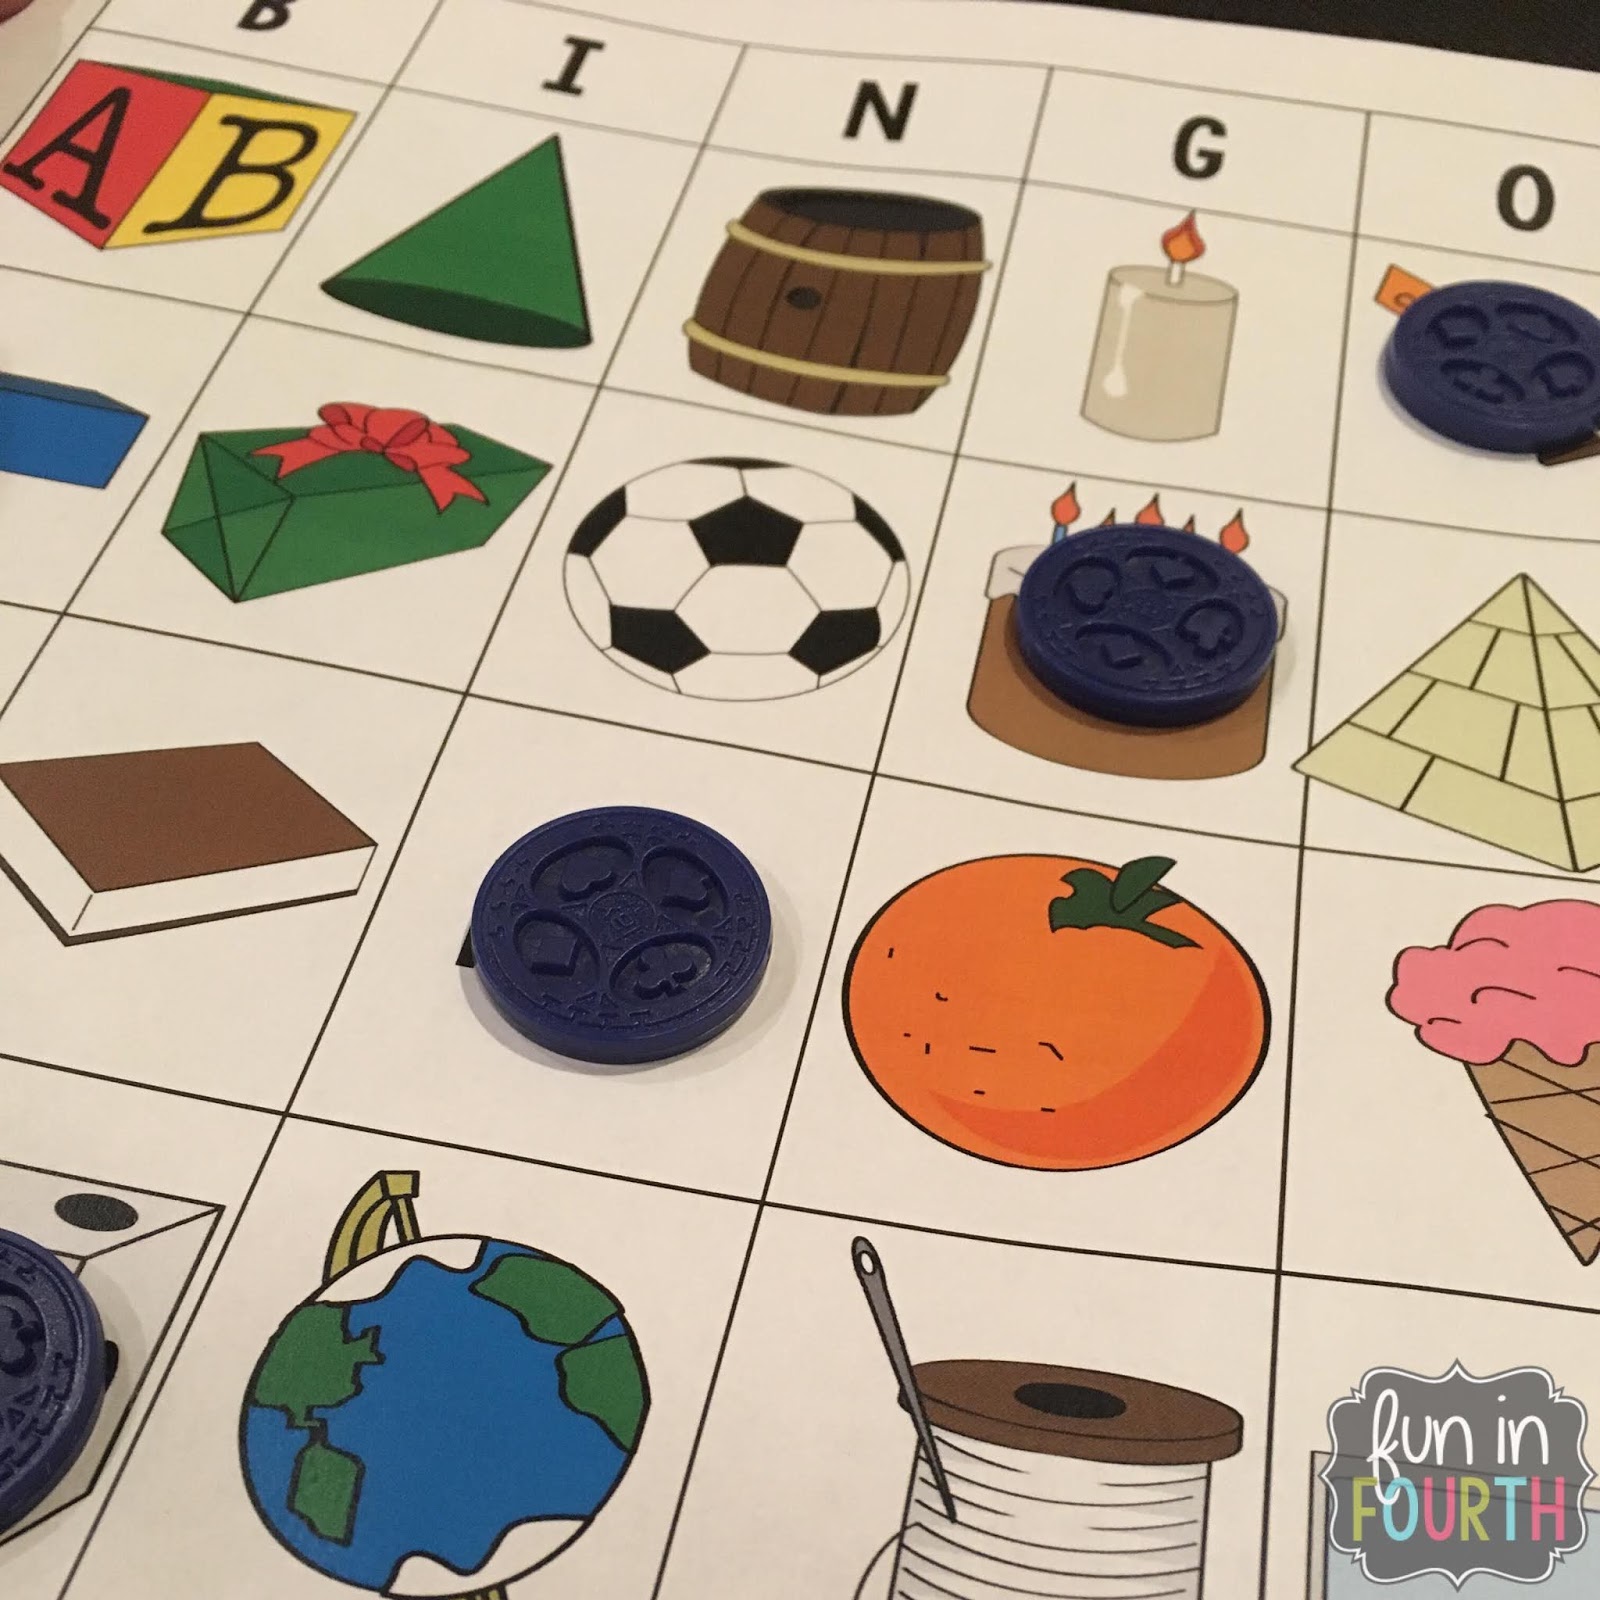 3d-shapes-bingofun-in-fourth-3d-shapes-bingo